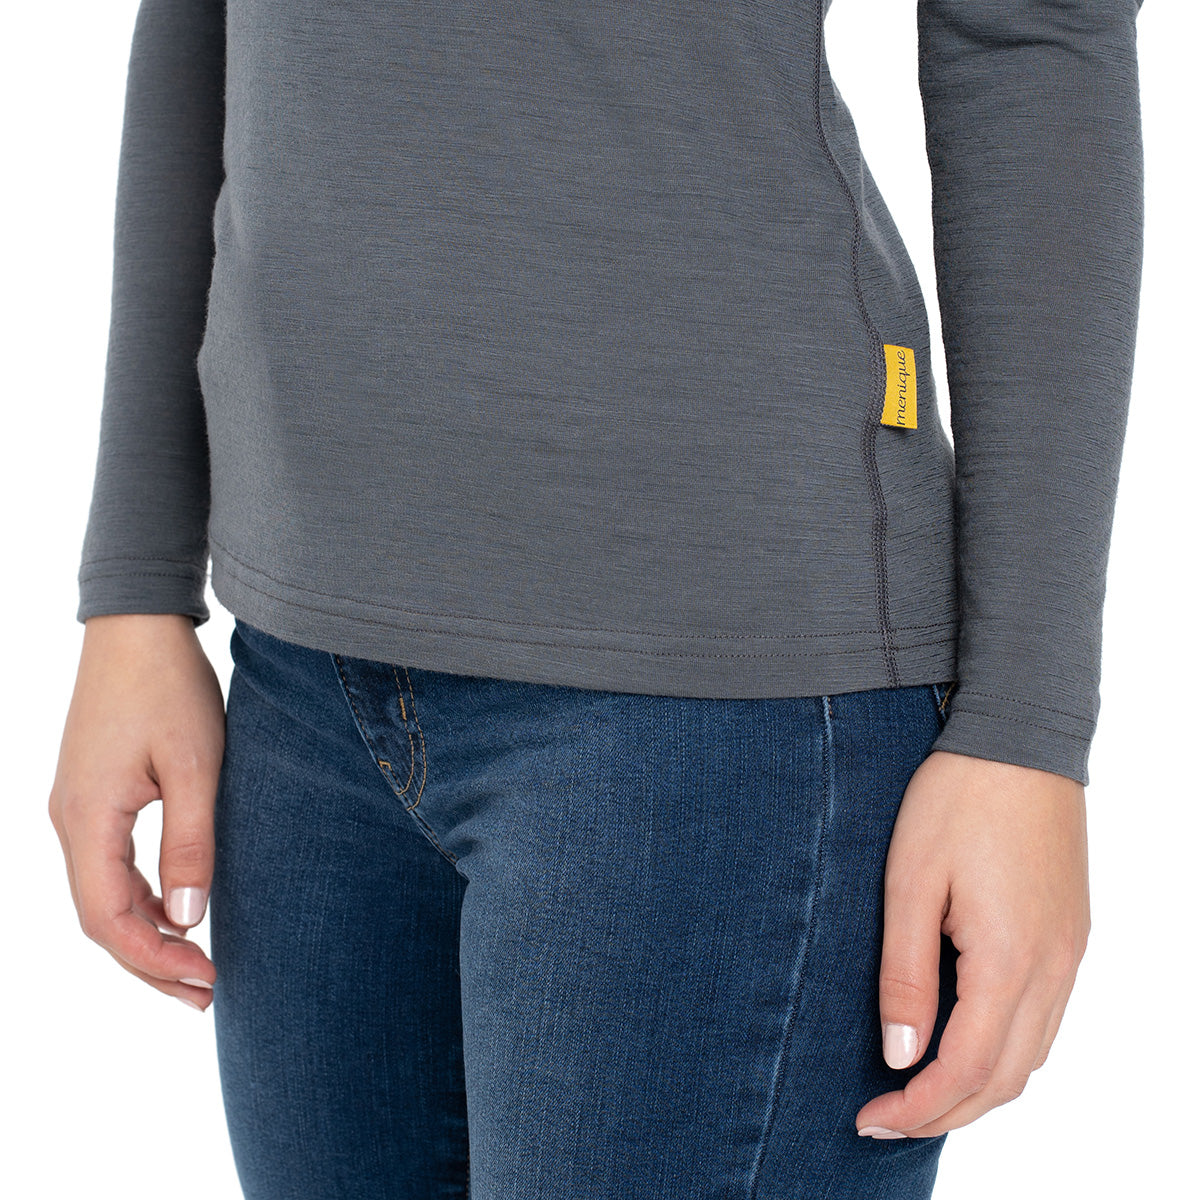 MENIQUE Long Sleeve Crew 100% Merino Wool Womens Shirt Perfect Grey